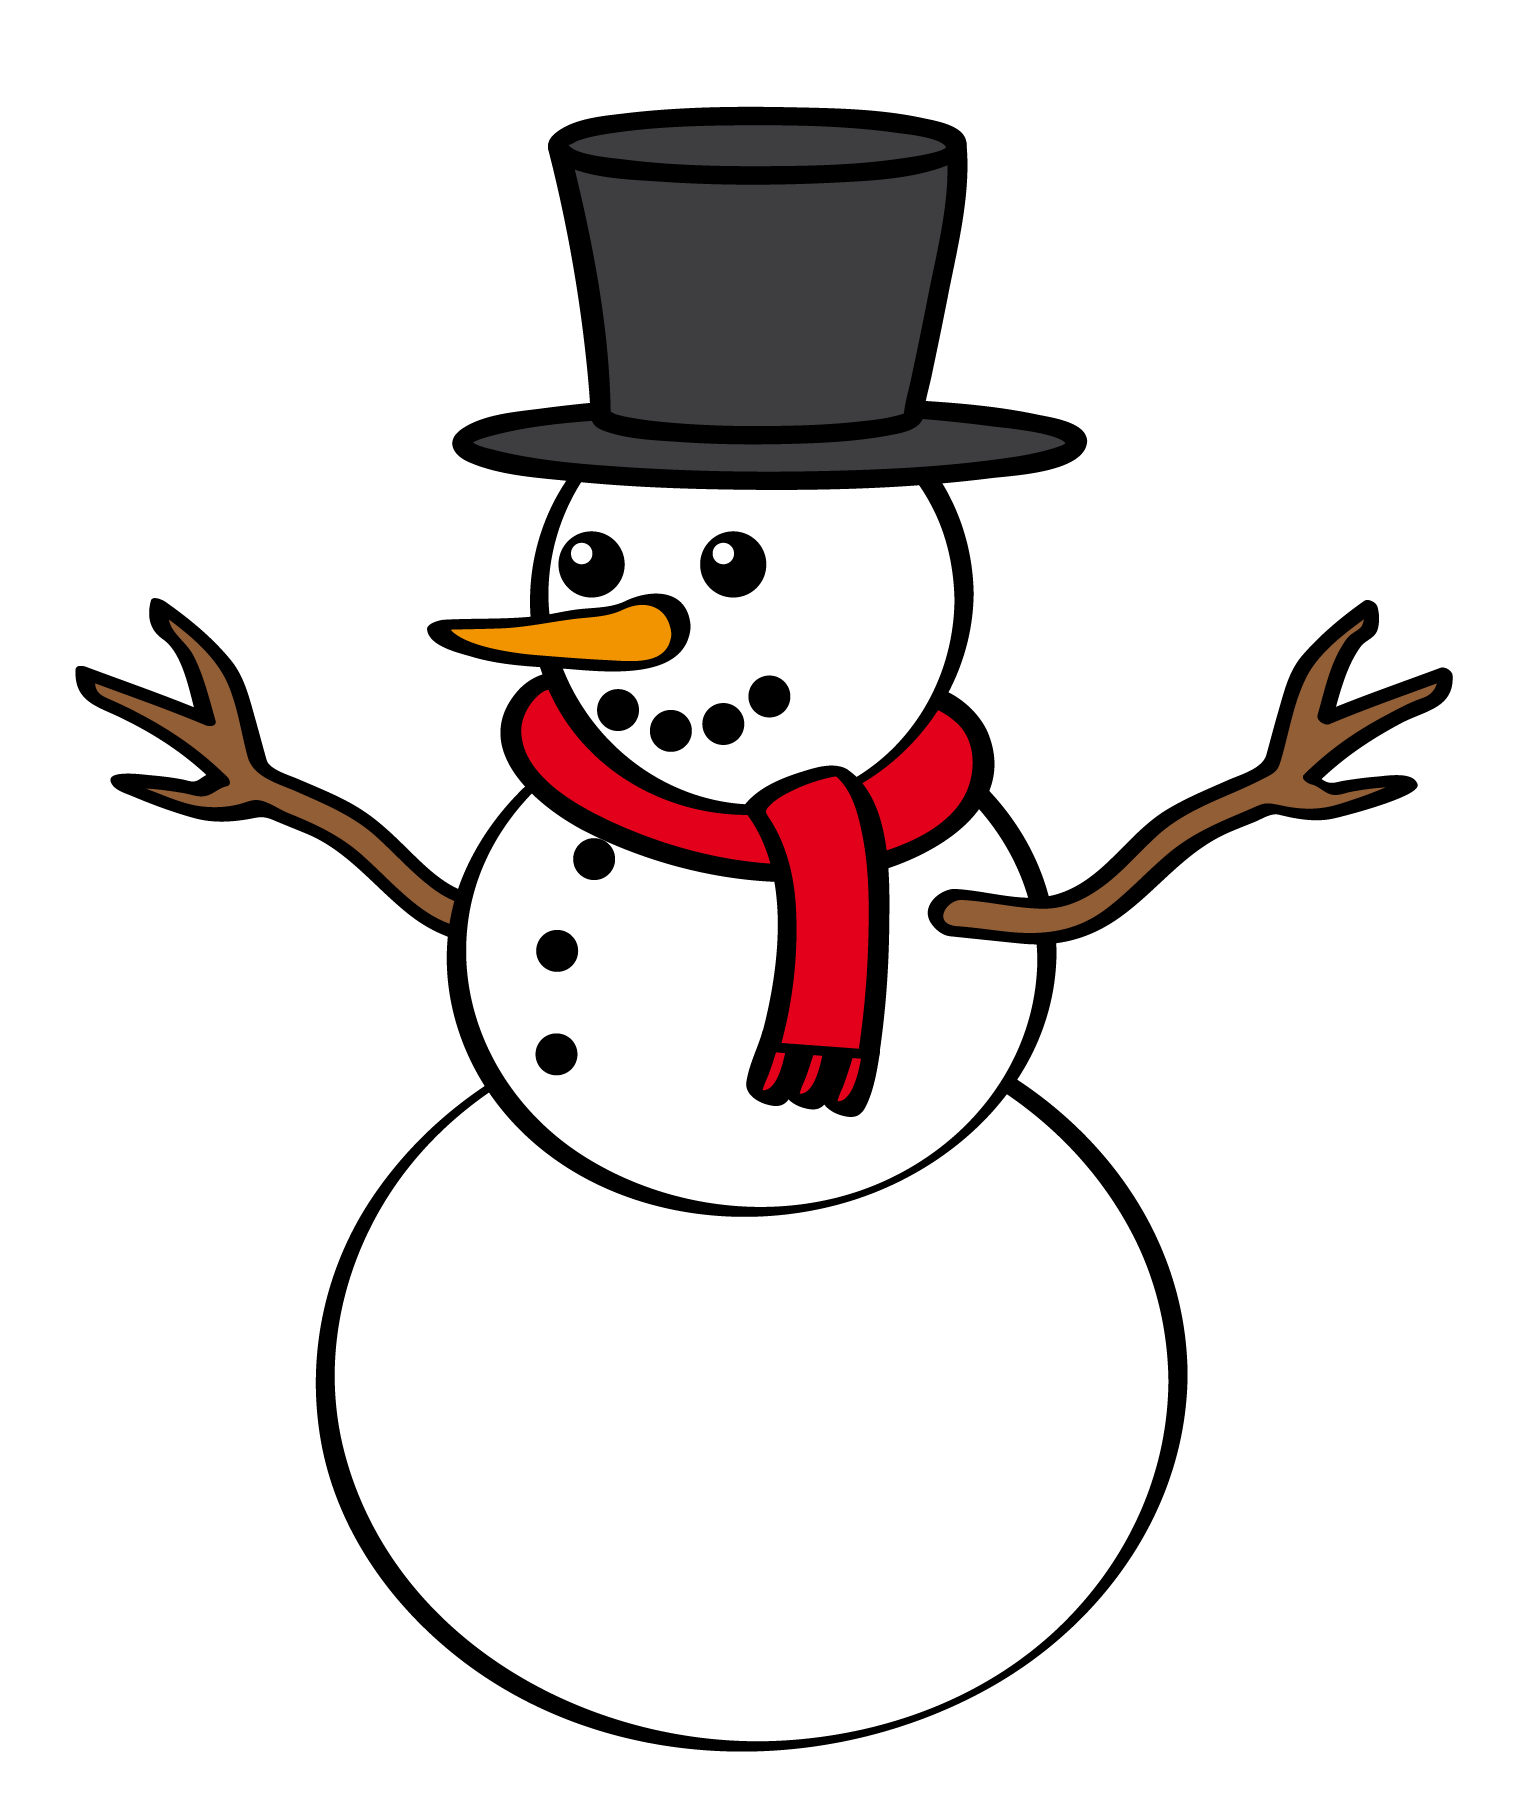 Snowman clipart. Free download clip art